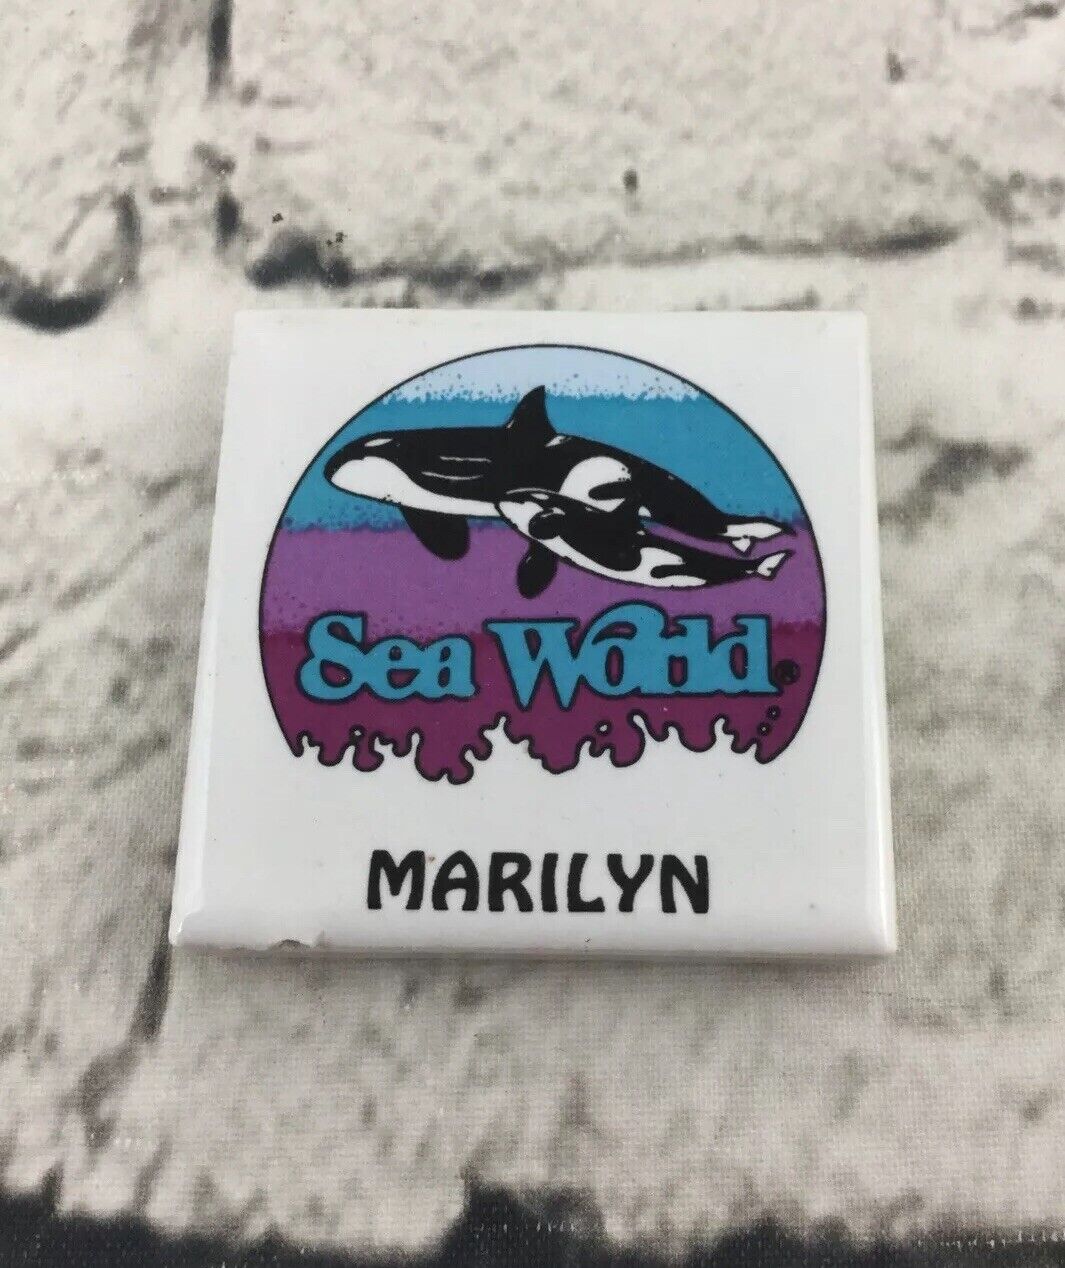 Sea World Ceramic Tile Souvenir Magnet Monogrammed Marilyn Small